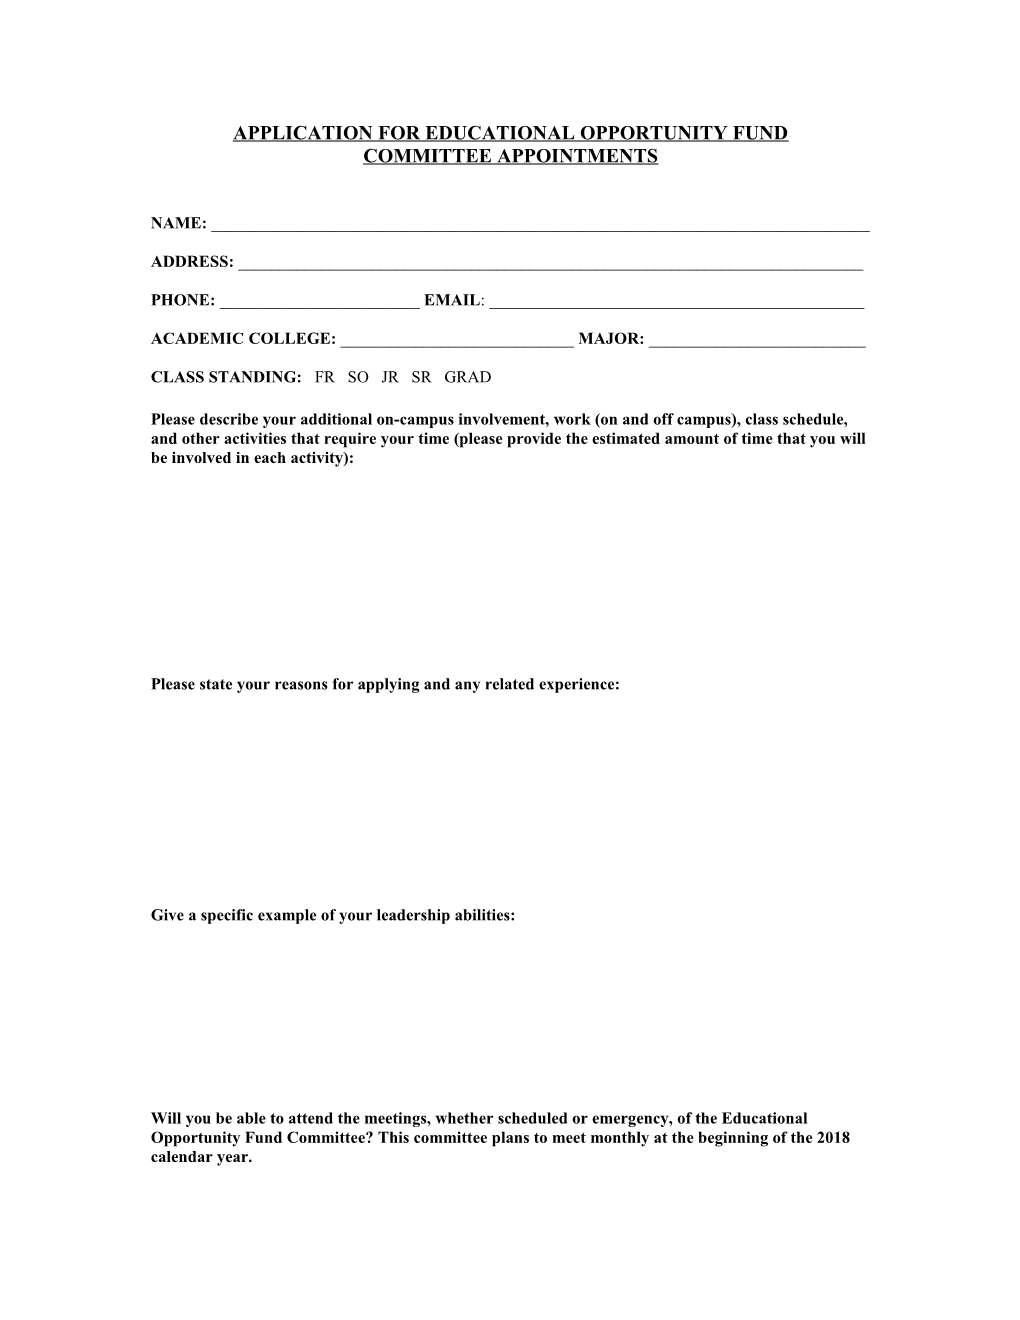 Application for Directors/Committee Chairmen